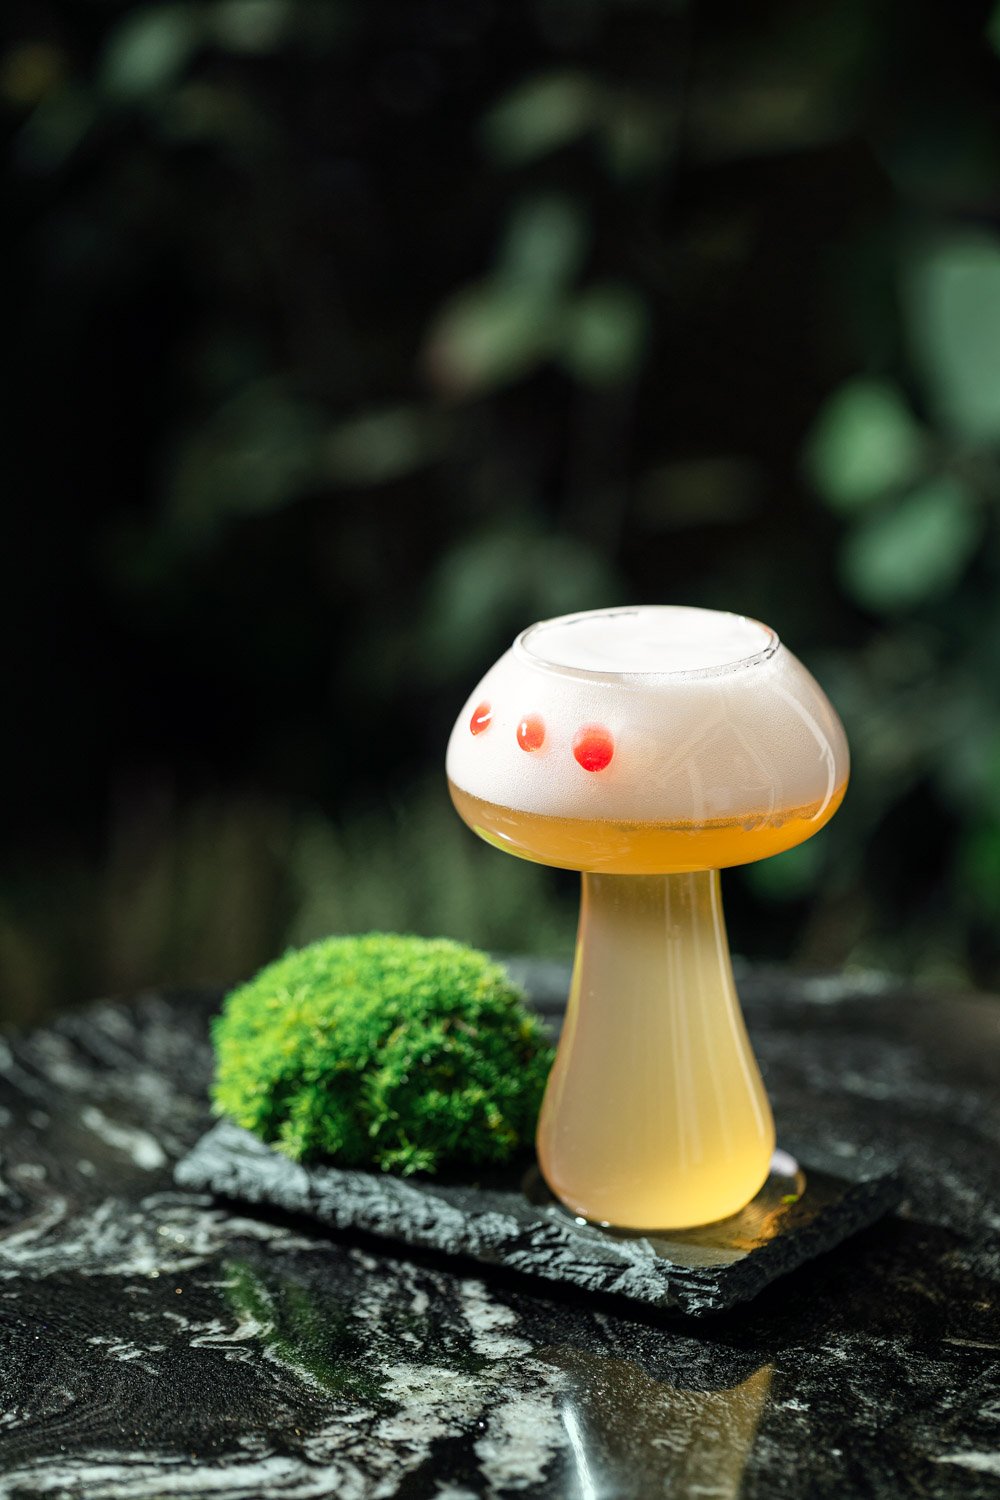 Mushroom drink photo for hotel kings court by jiri lizler photo.jpg